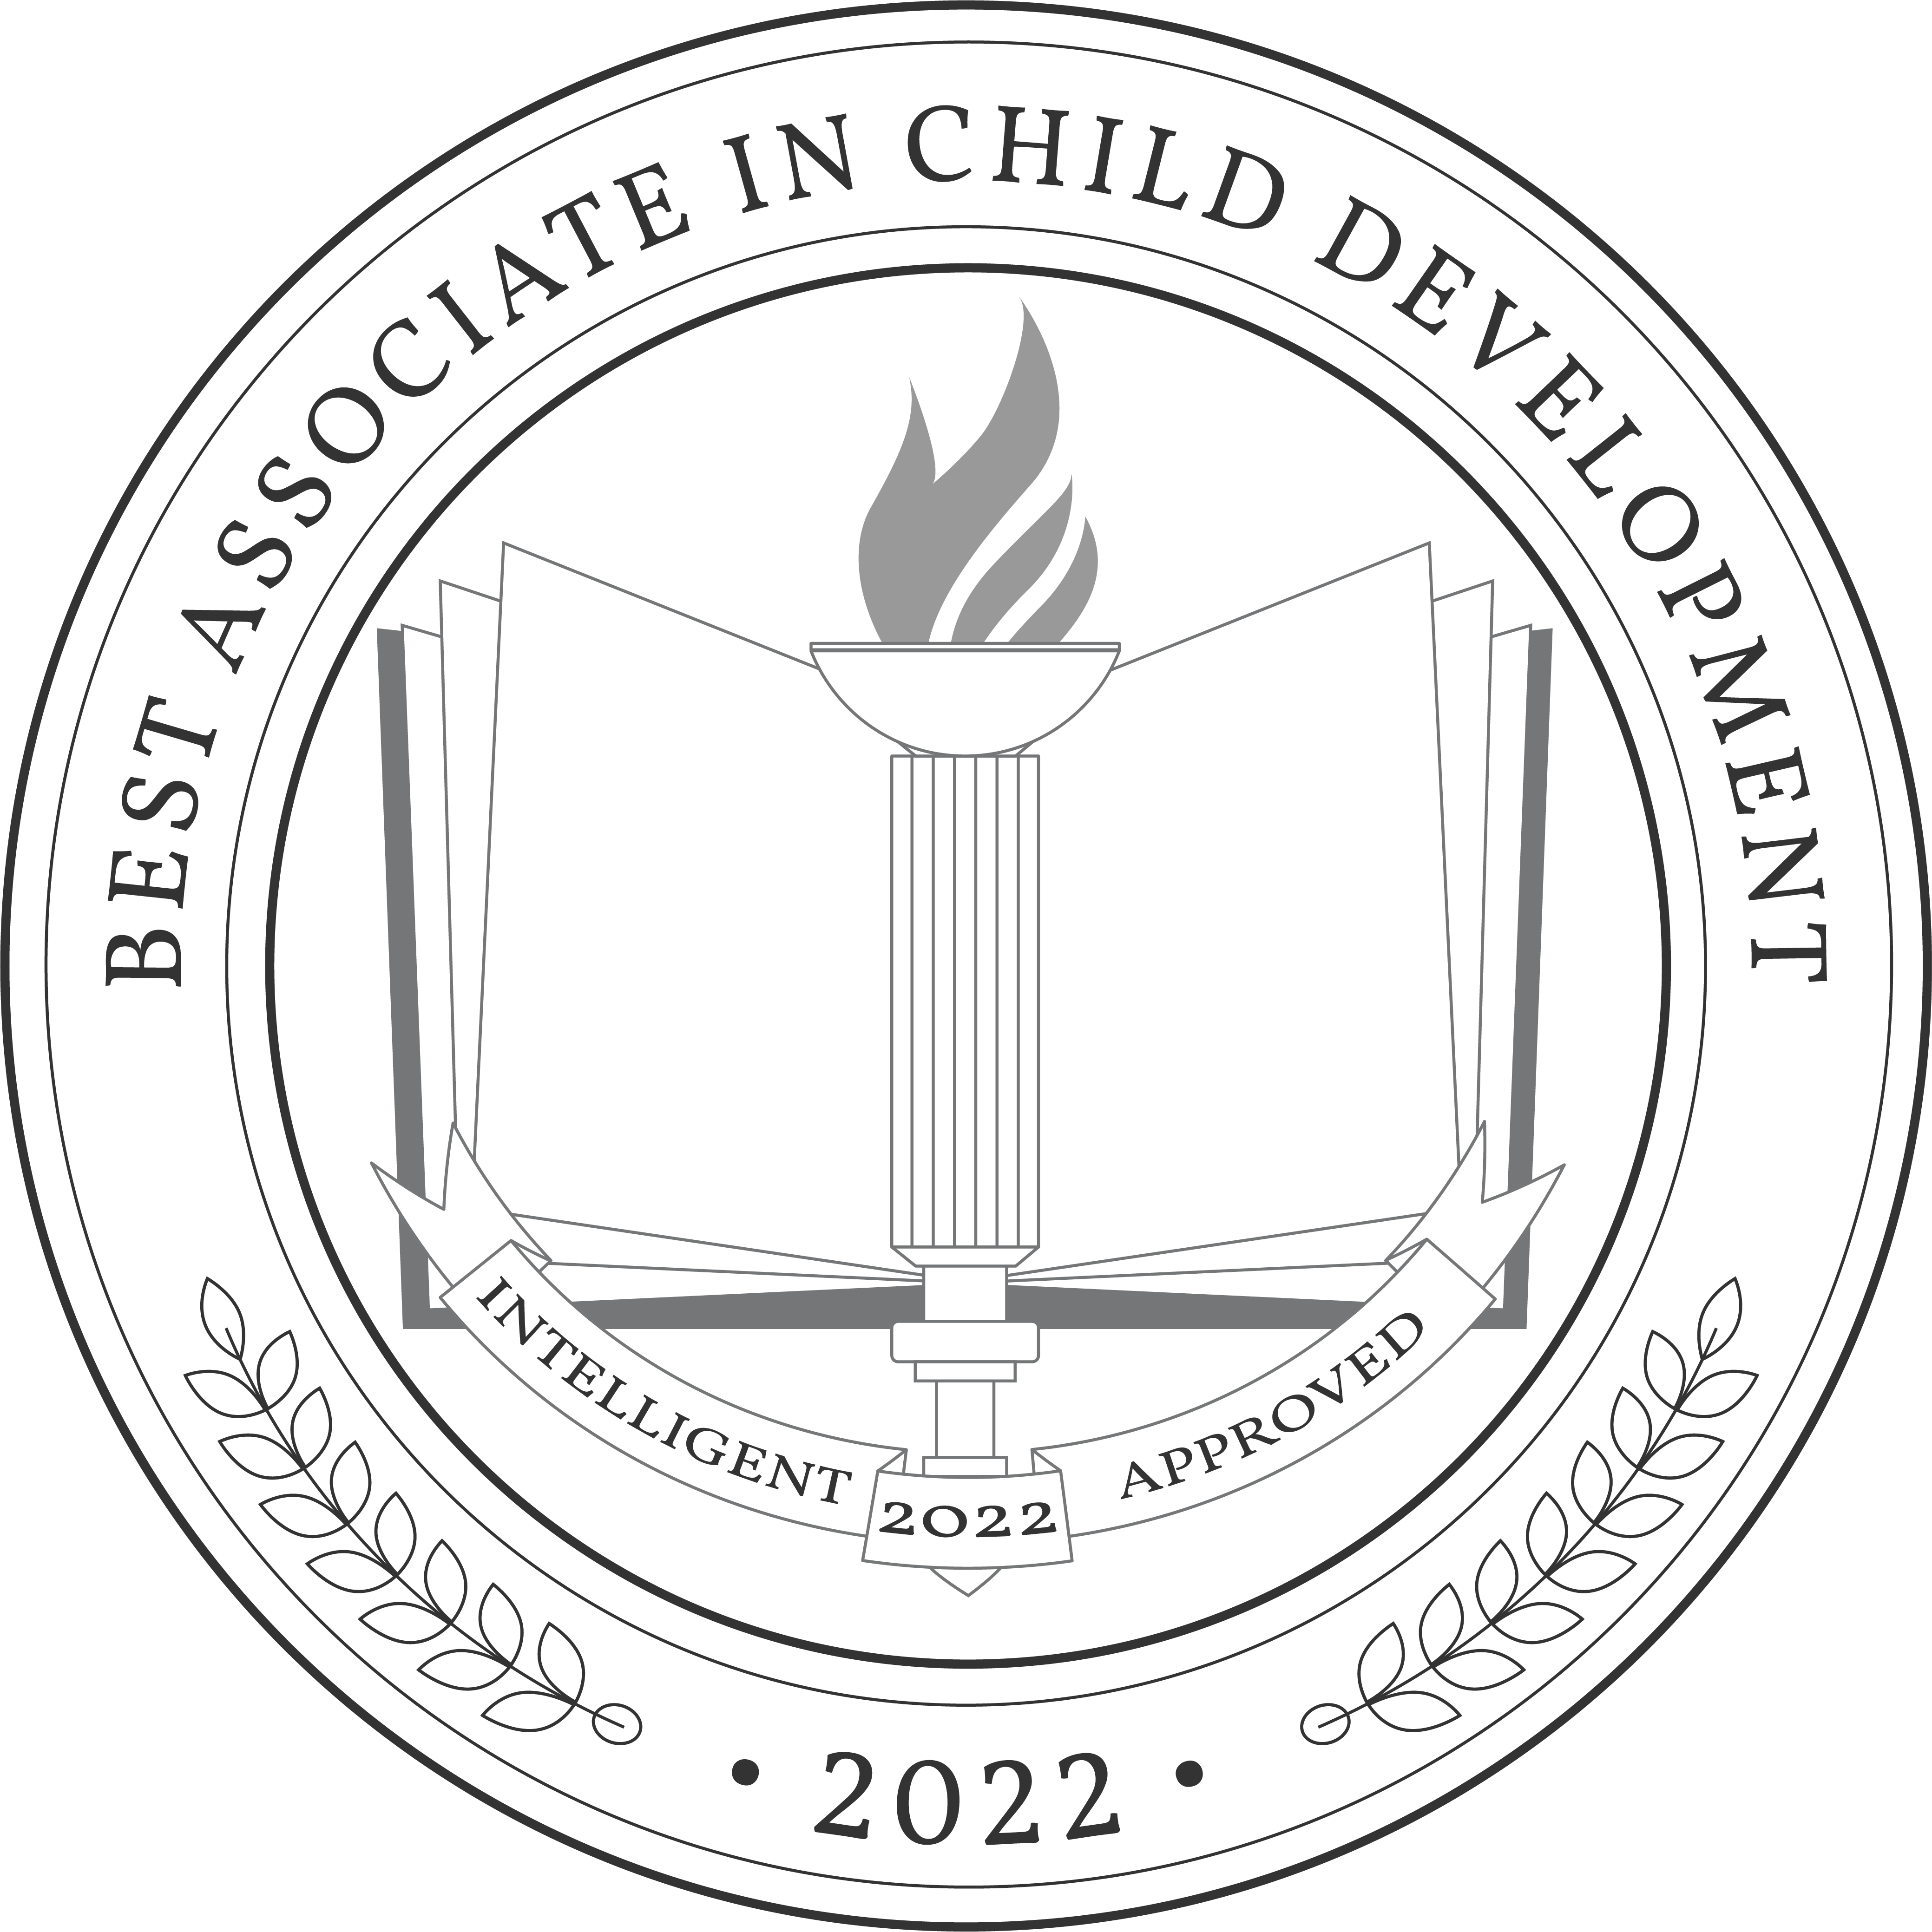 Best Online Associate in Child Development Programs Badge